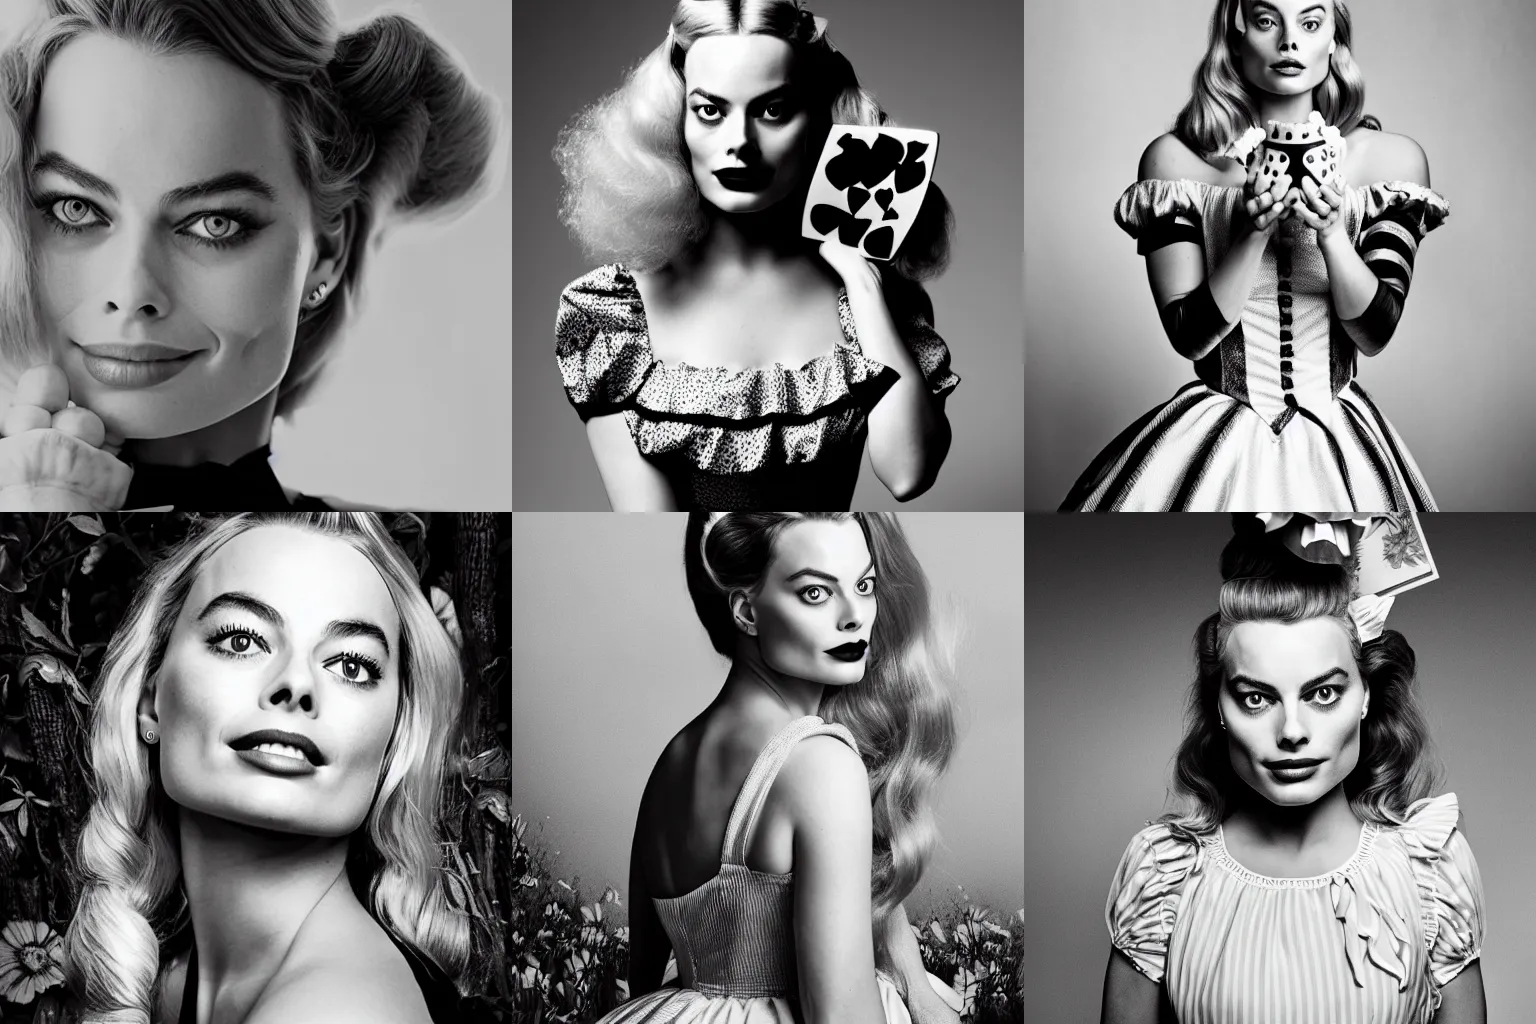 Prompt: B&W portrait of Margot Robbie as Alice in Wonderland